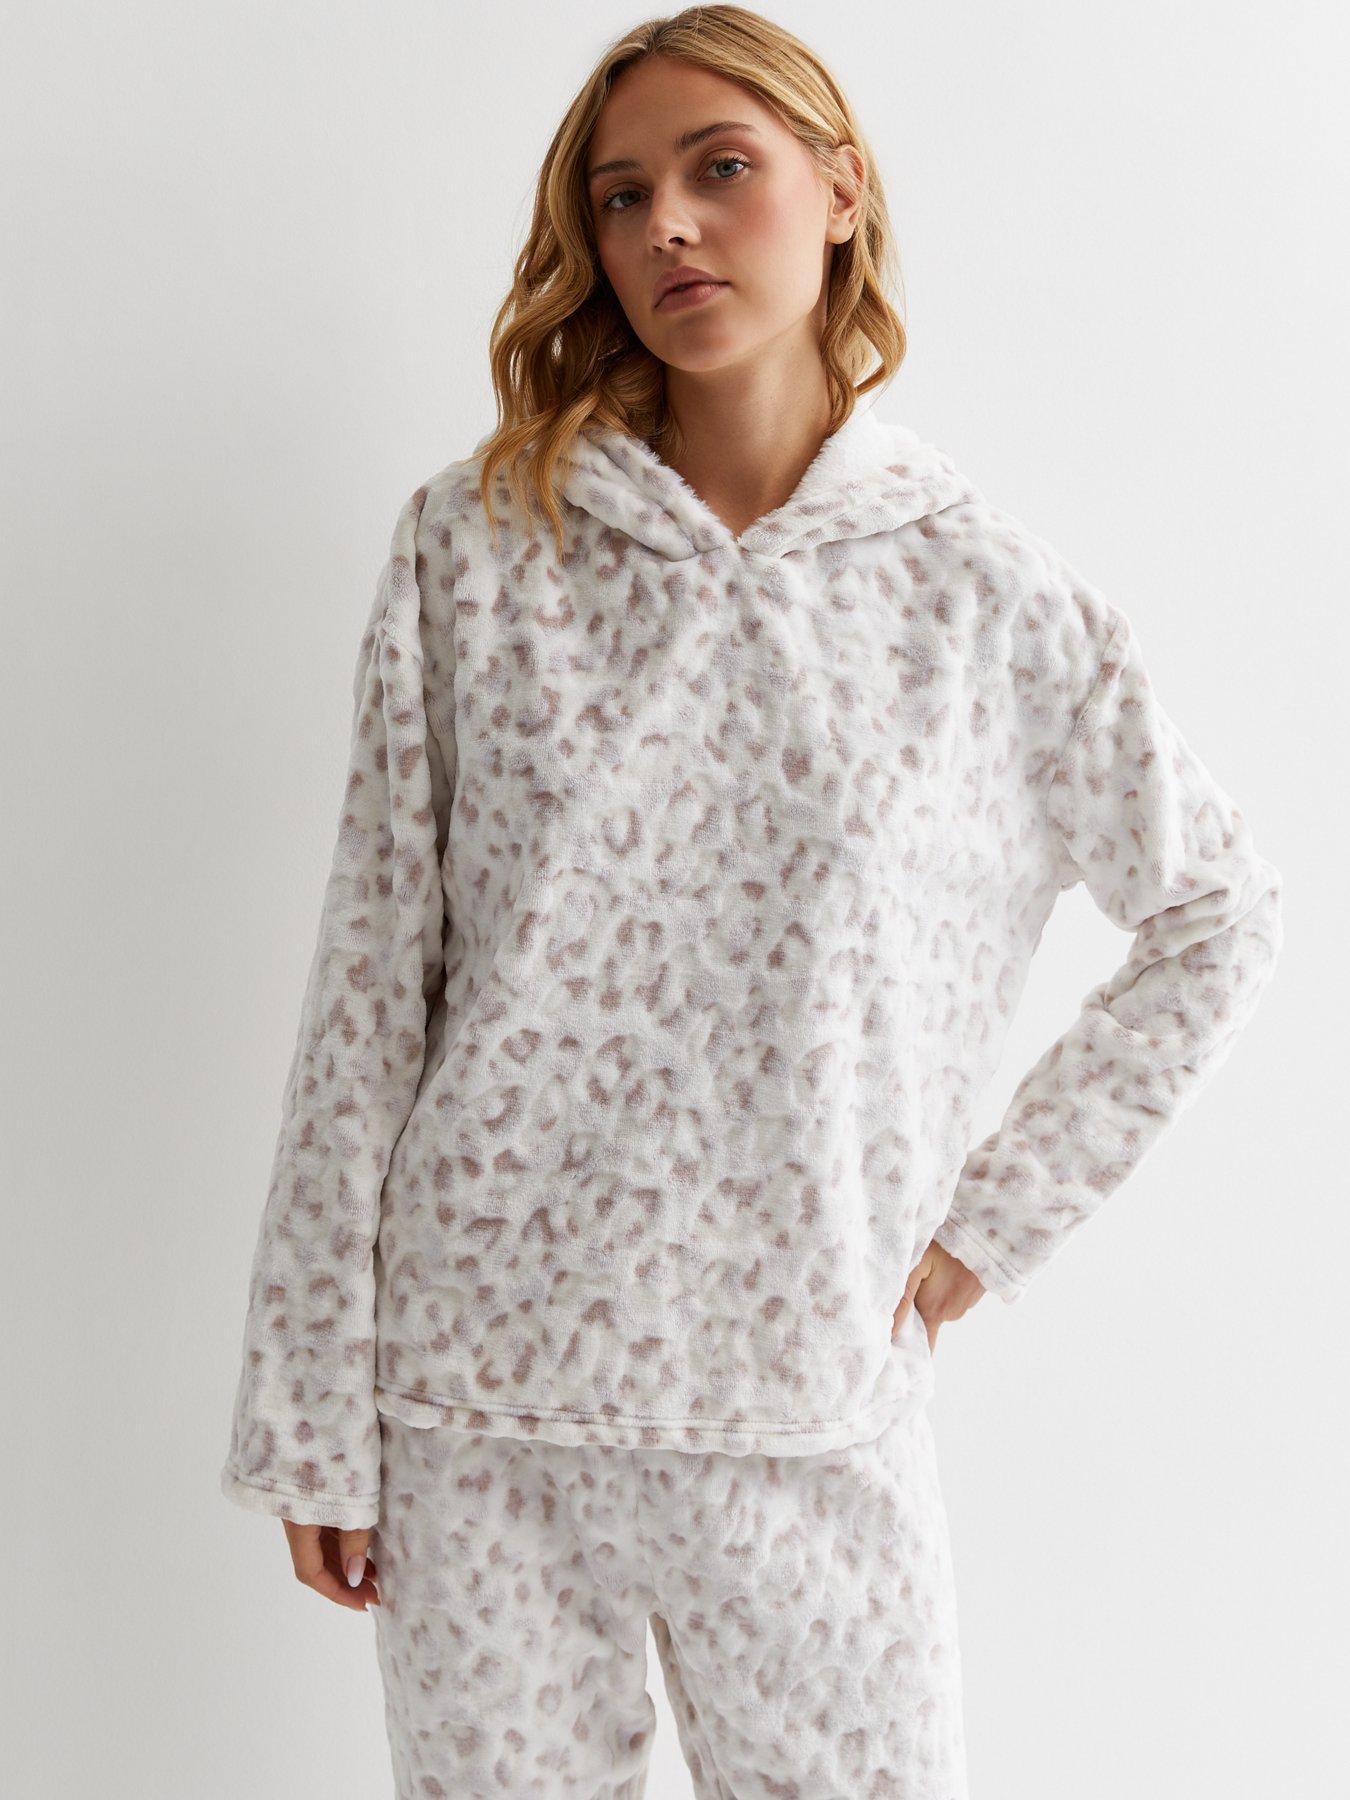 Light Grey Legging Pyjama Set with Heart Print